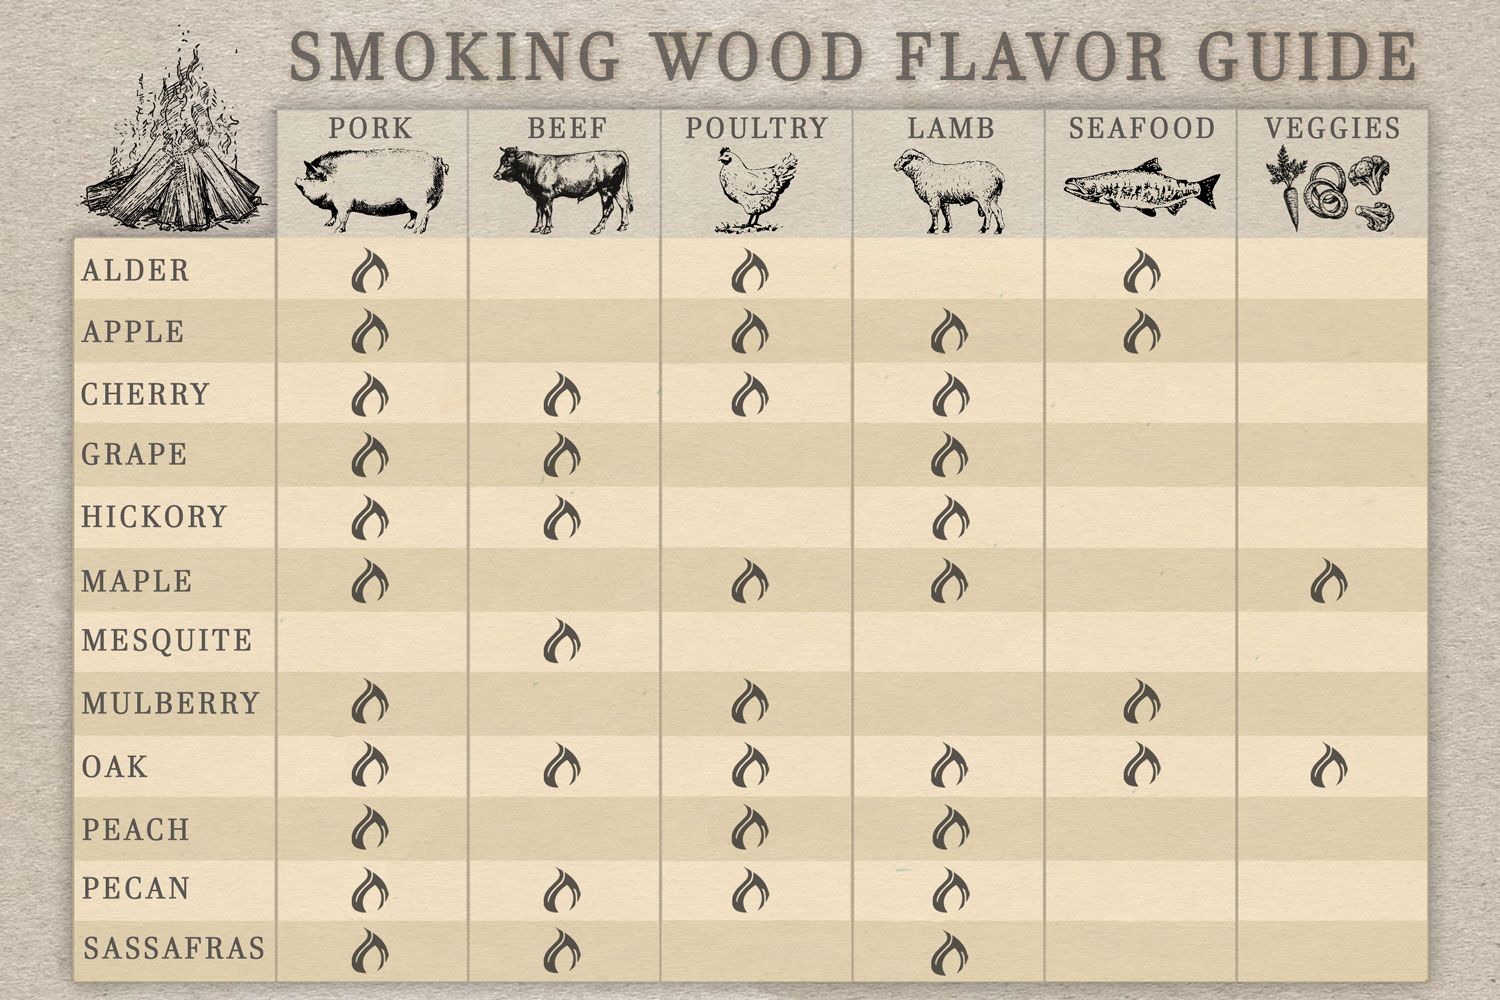 https://www.specialtygashouse.com/wp-content/uploads/2020/05/smoking-wood-guide.jpg